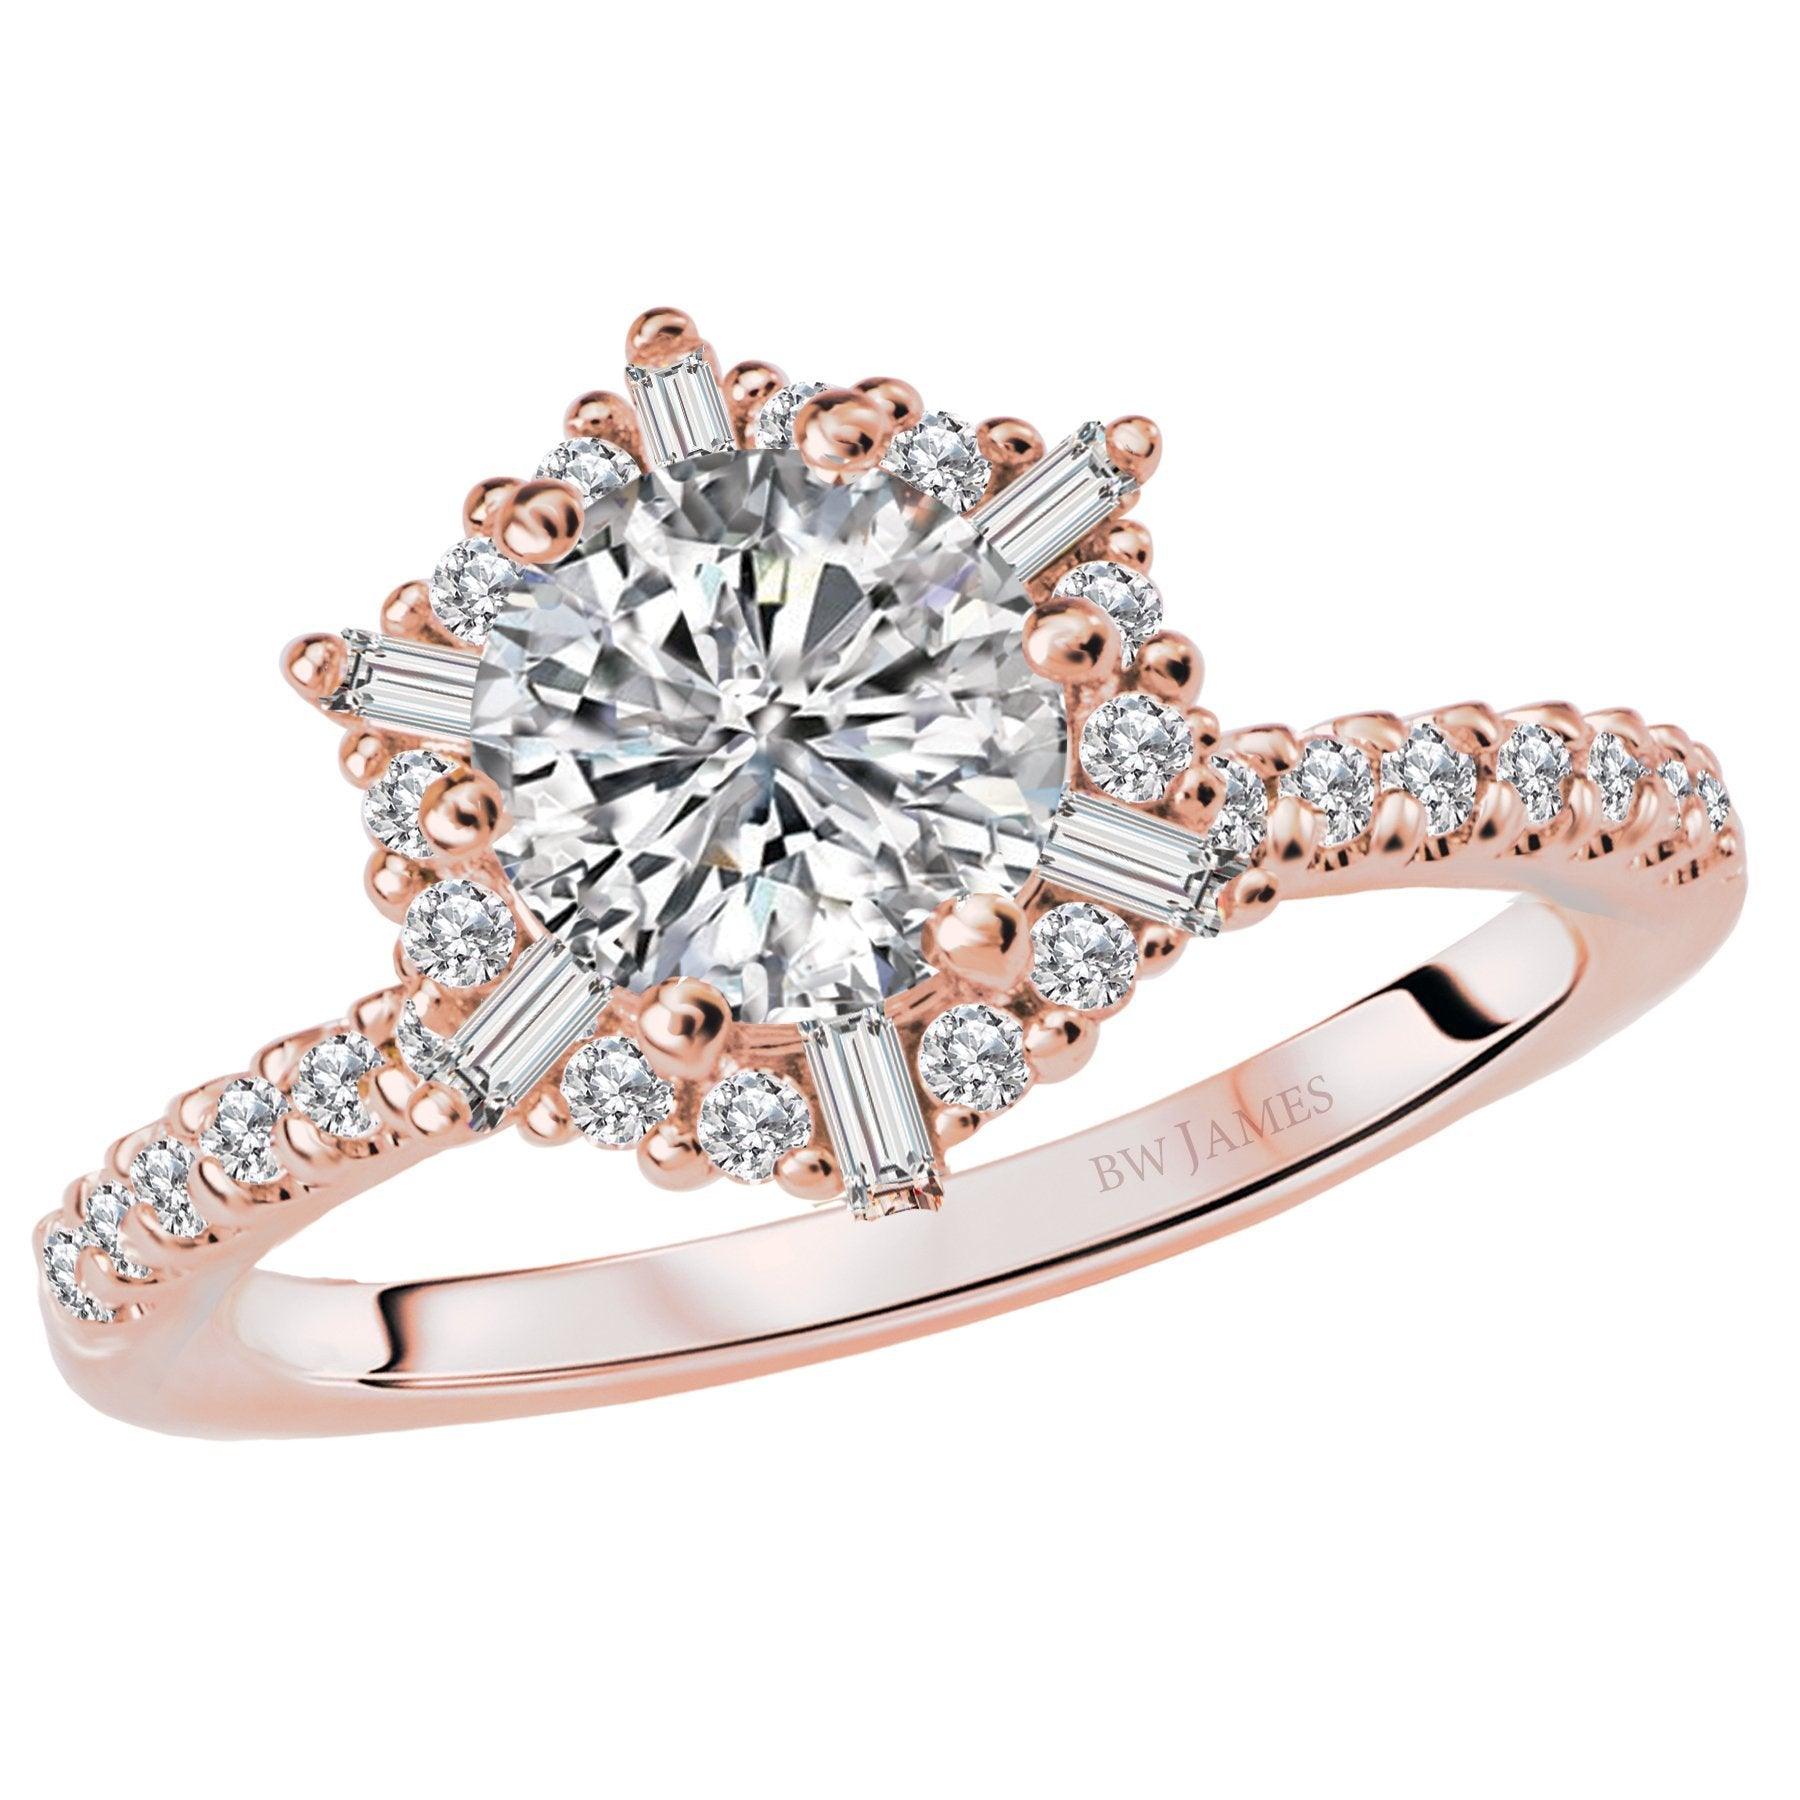 BW JAMES Engagement Rings " The Carson" Halo Semi-Mount Diamond Ring